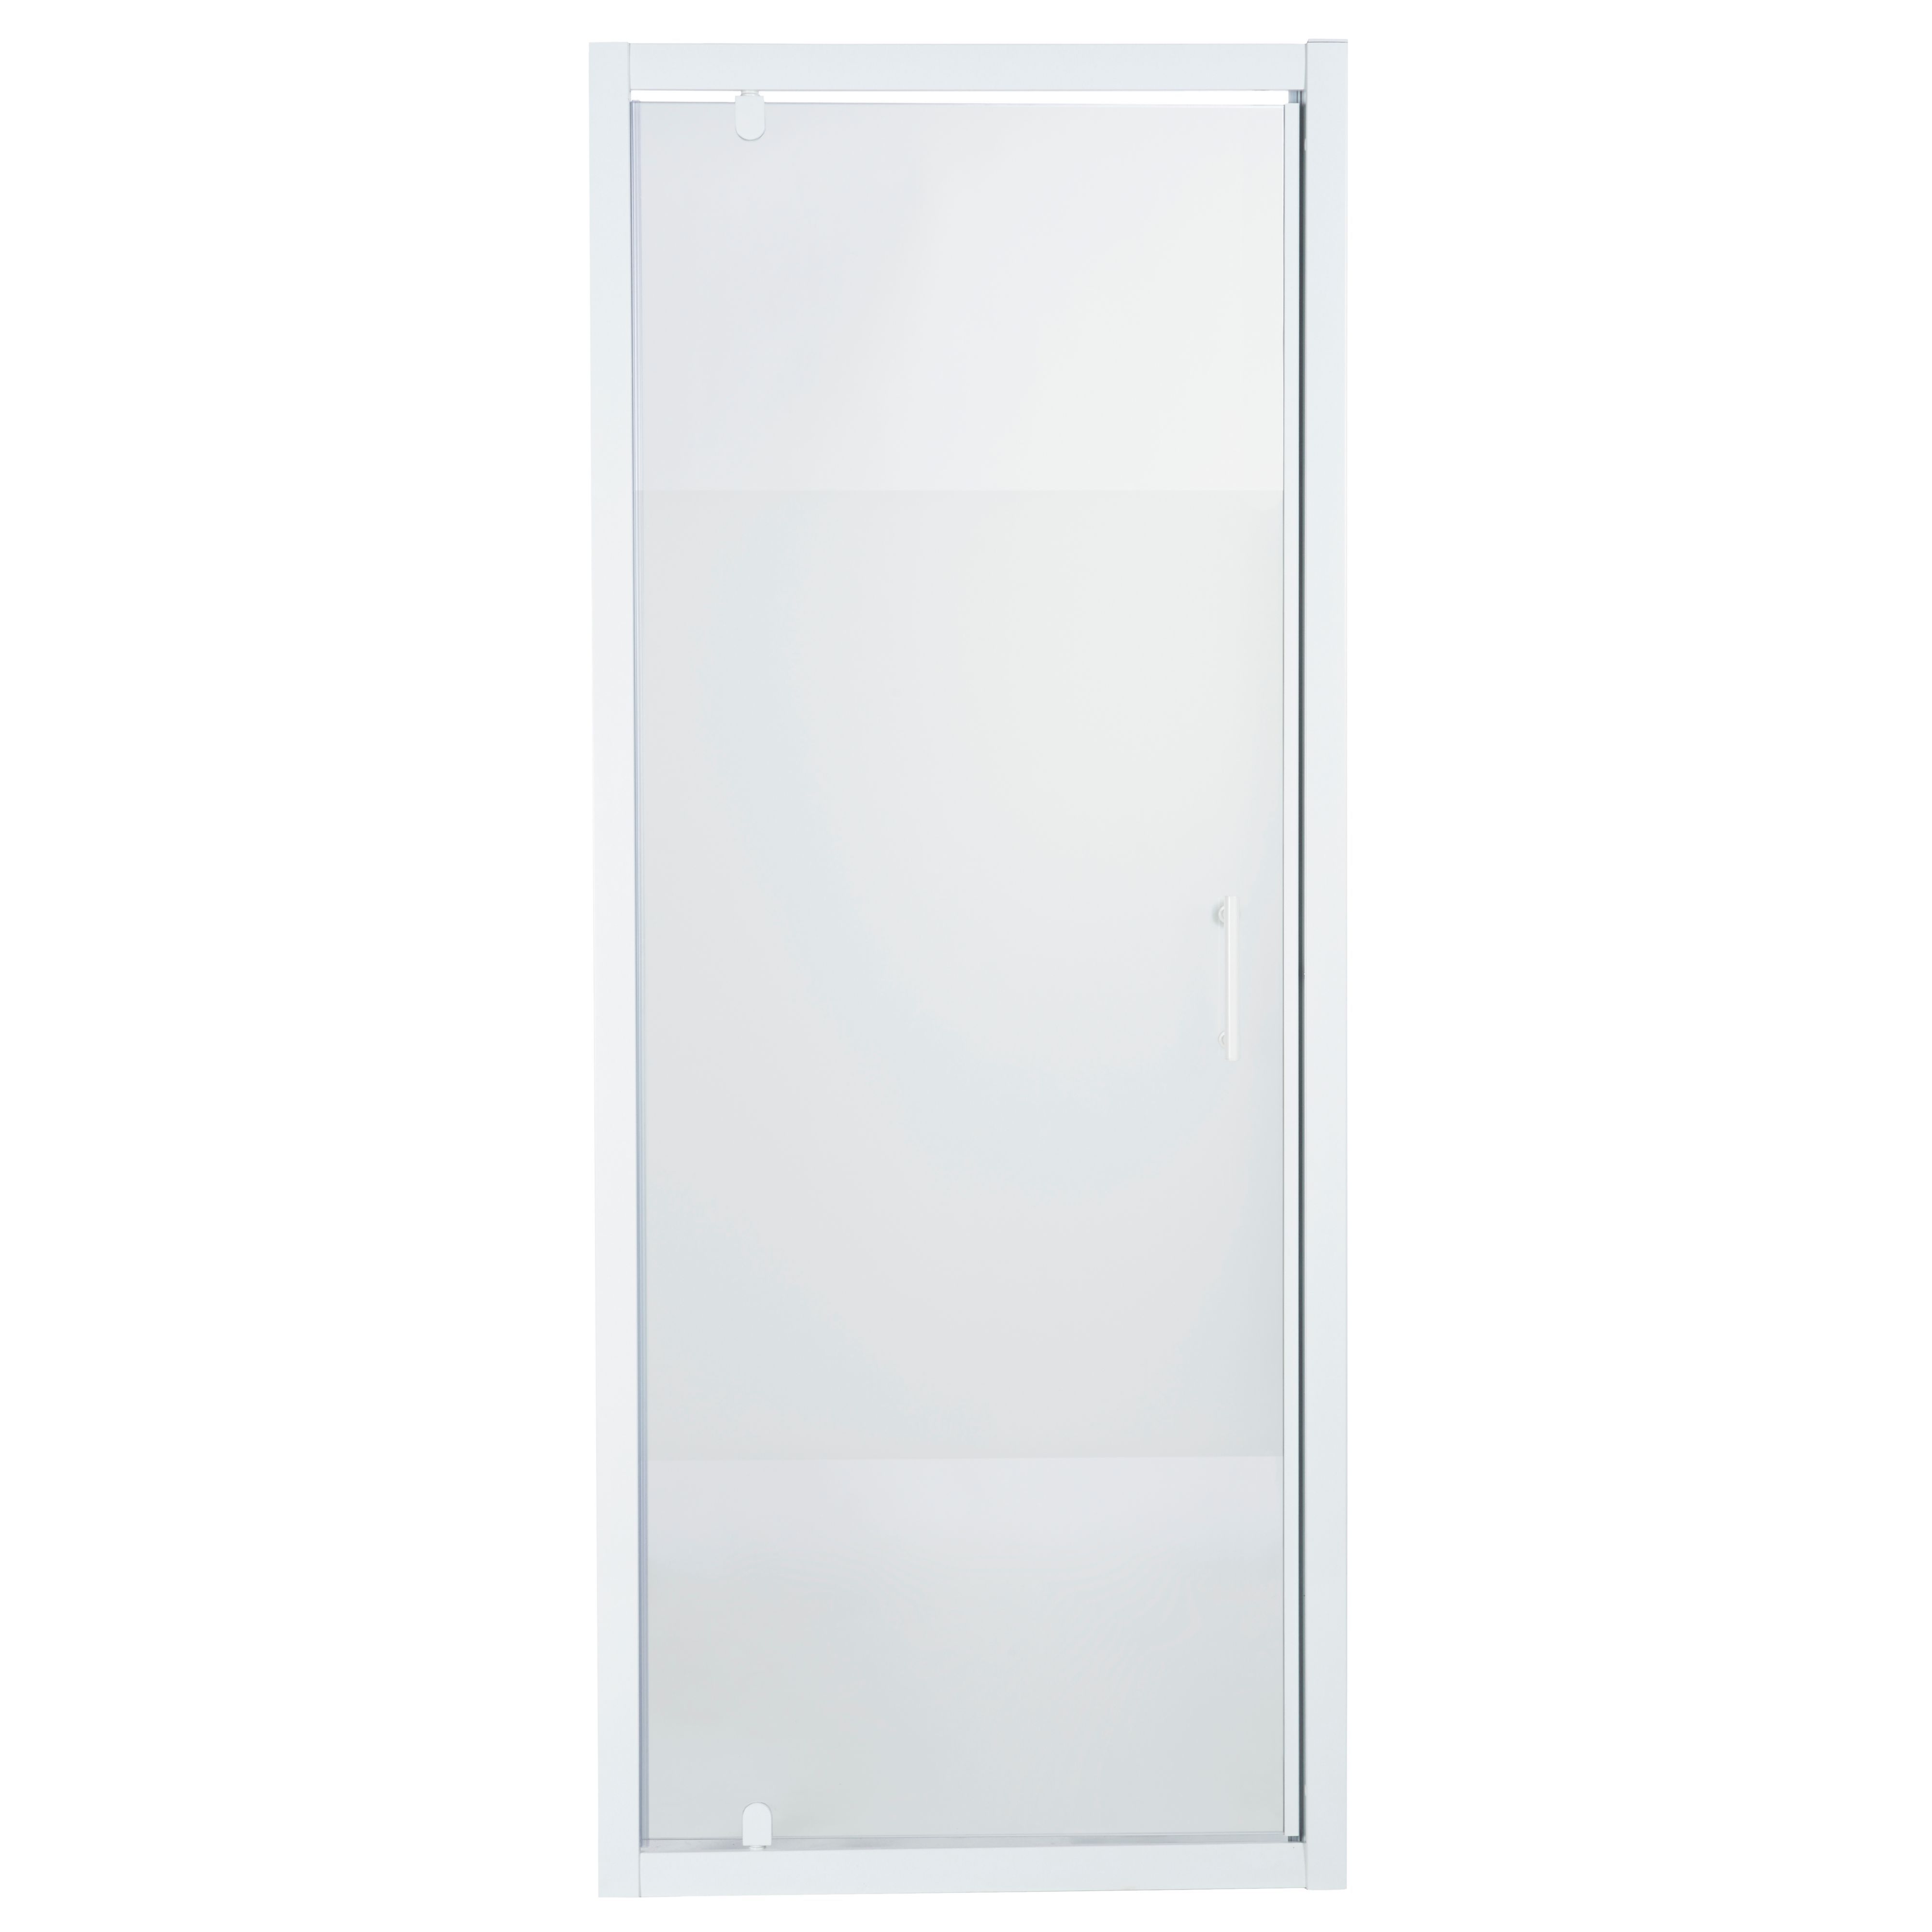 Cooke & Lewis Onega Blanc Frosted Strip Full open pivot Shower Door (H)190cm (W)80cm